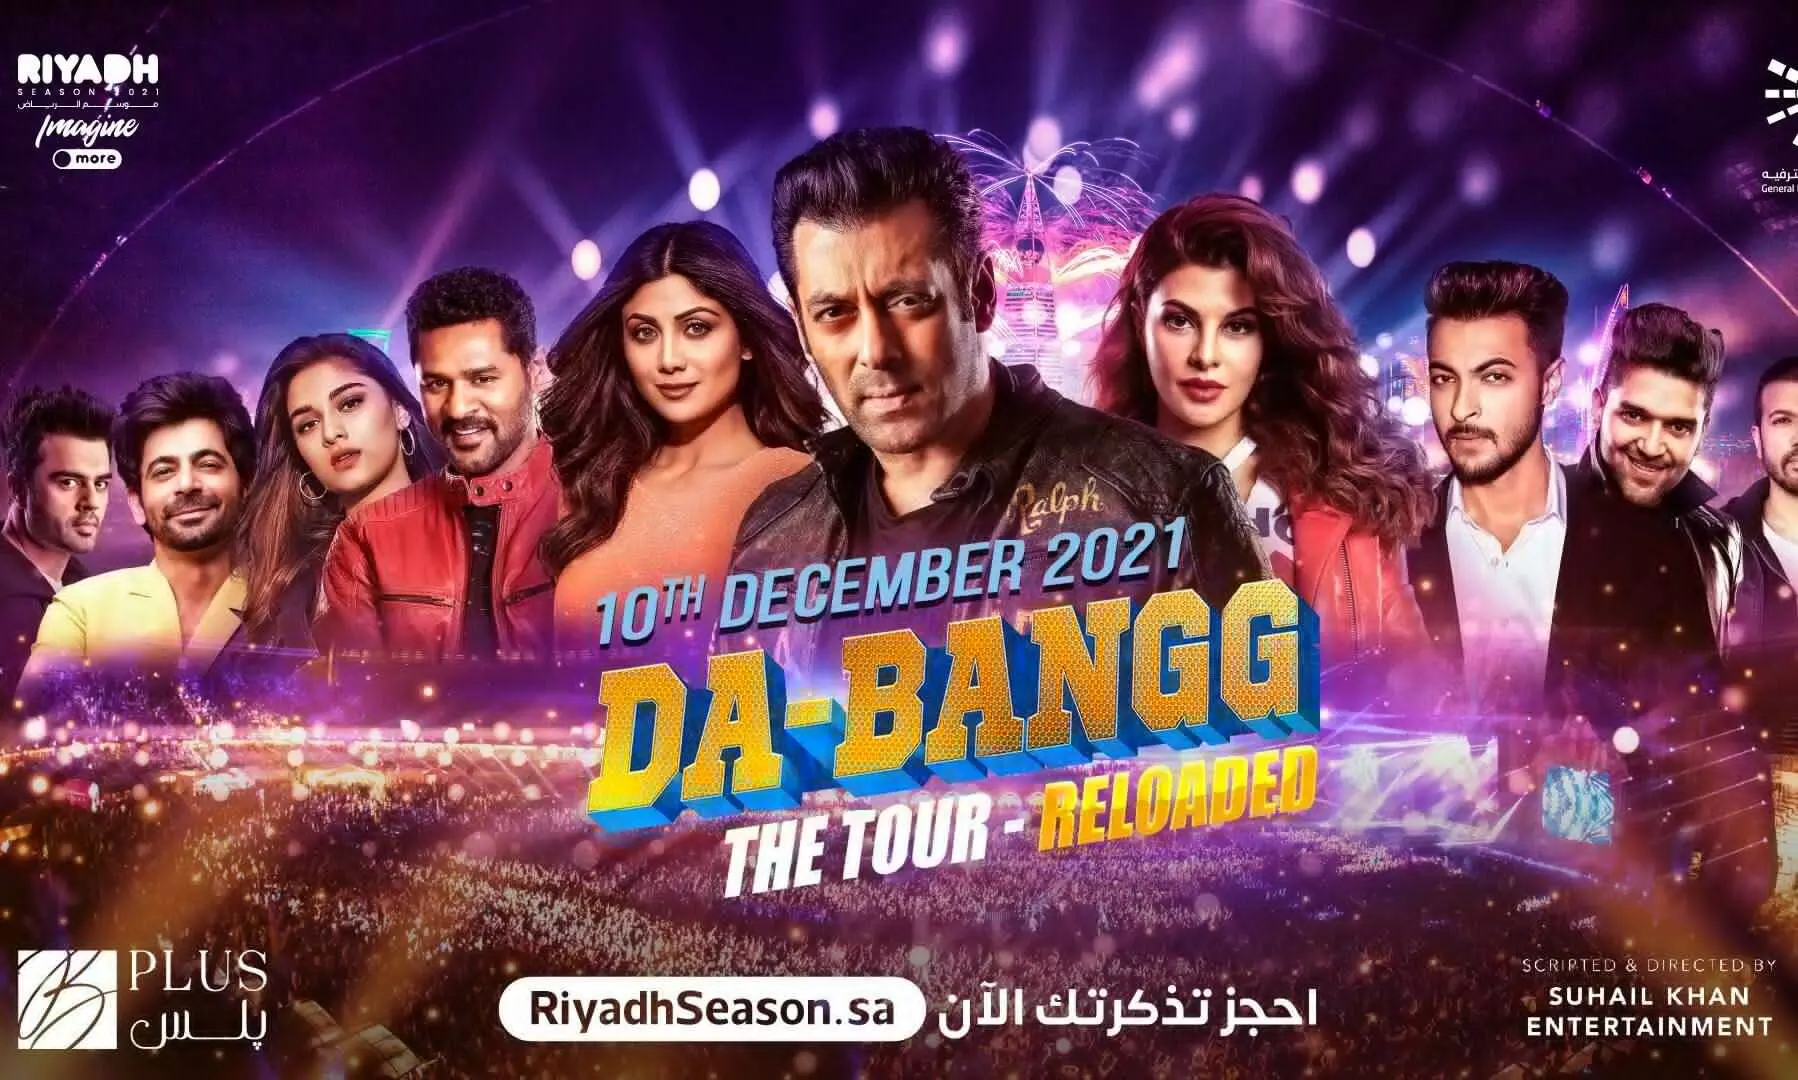 Riyadh Season 2021 visitors to meet Bollywood superstar Salman Khan on Dec 10